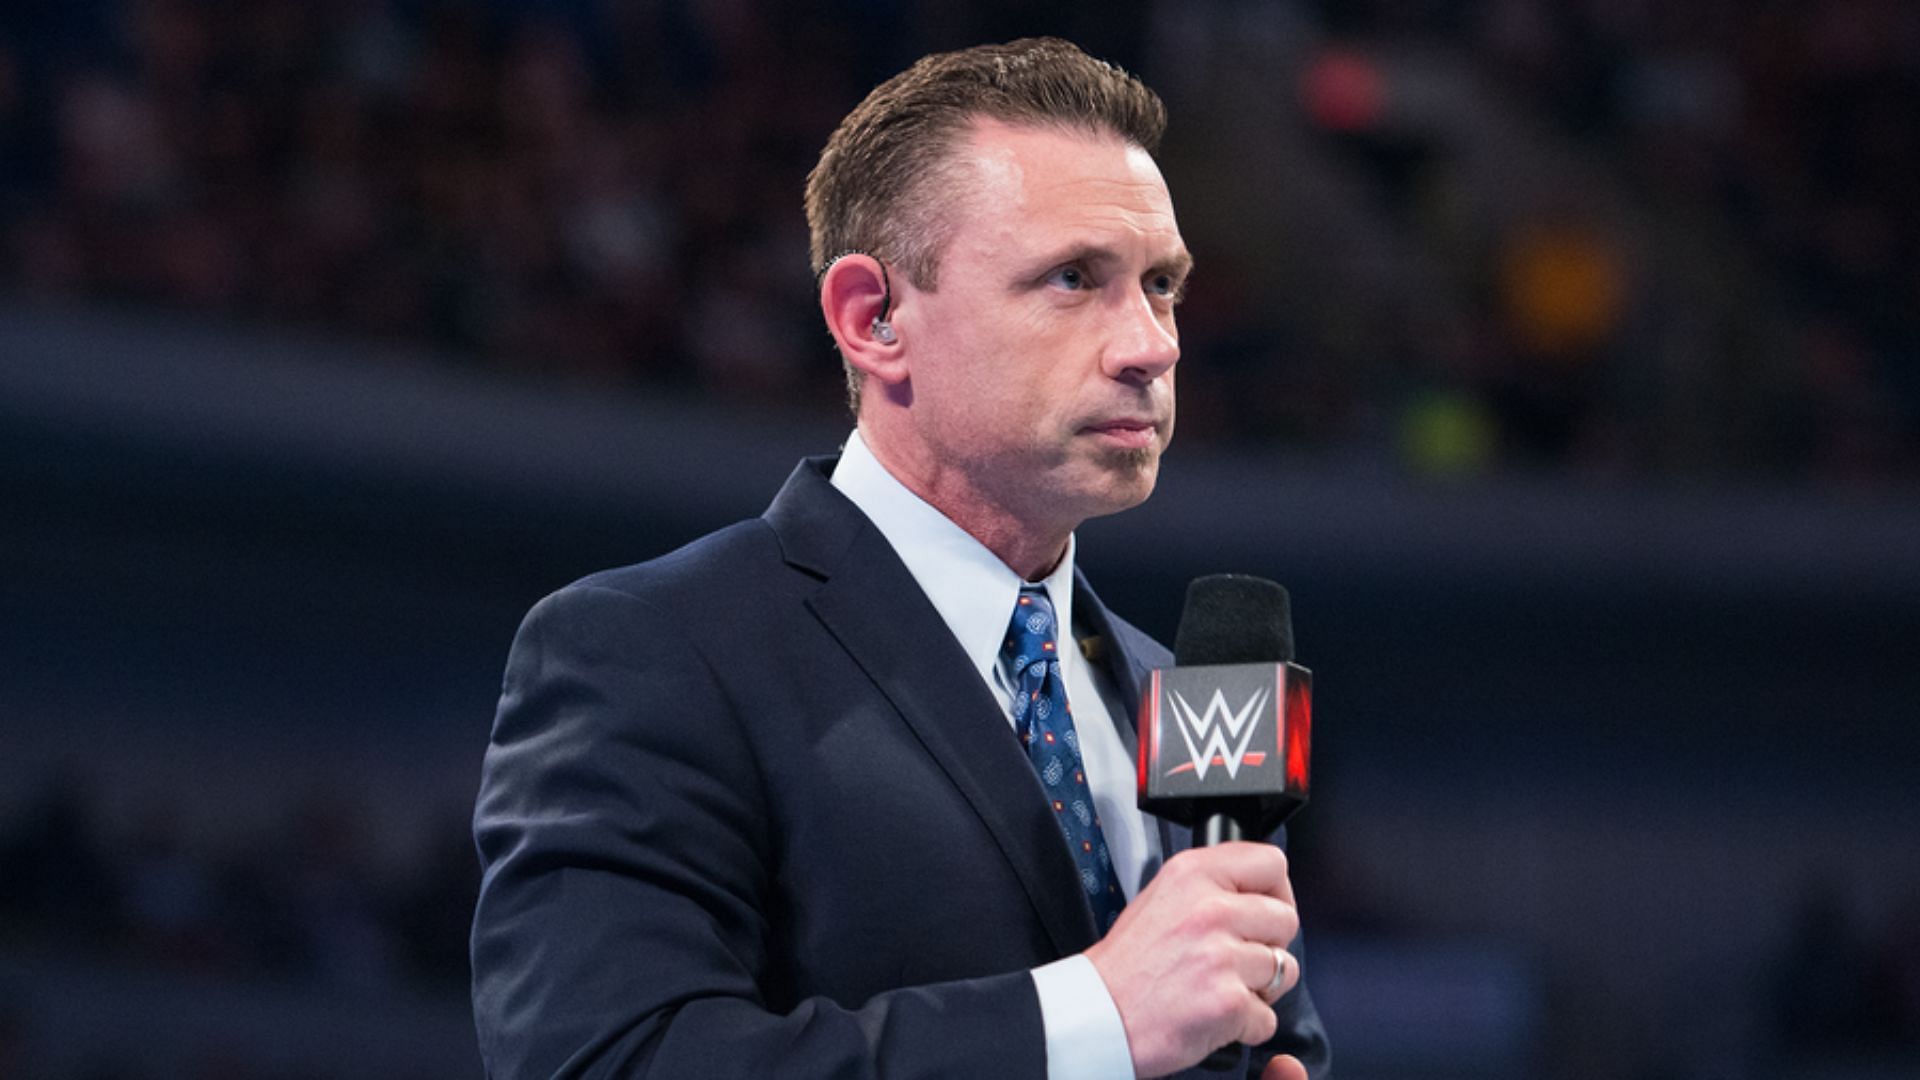 WWE lead announcer Michael Cole